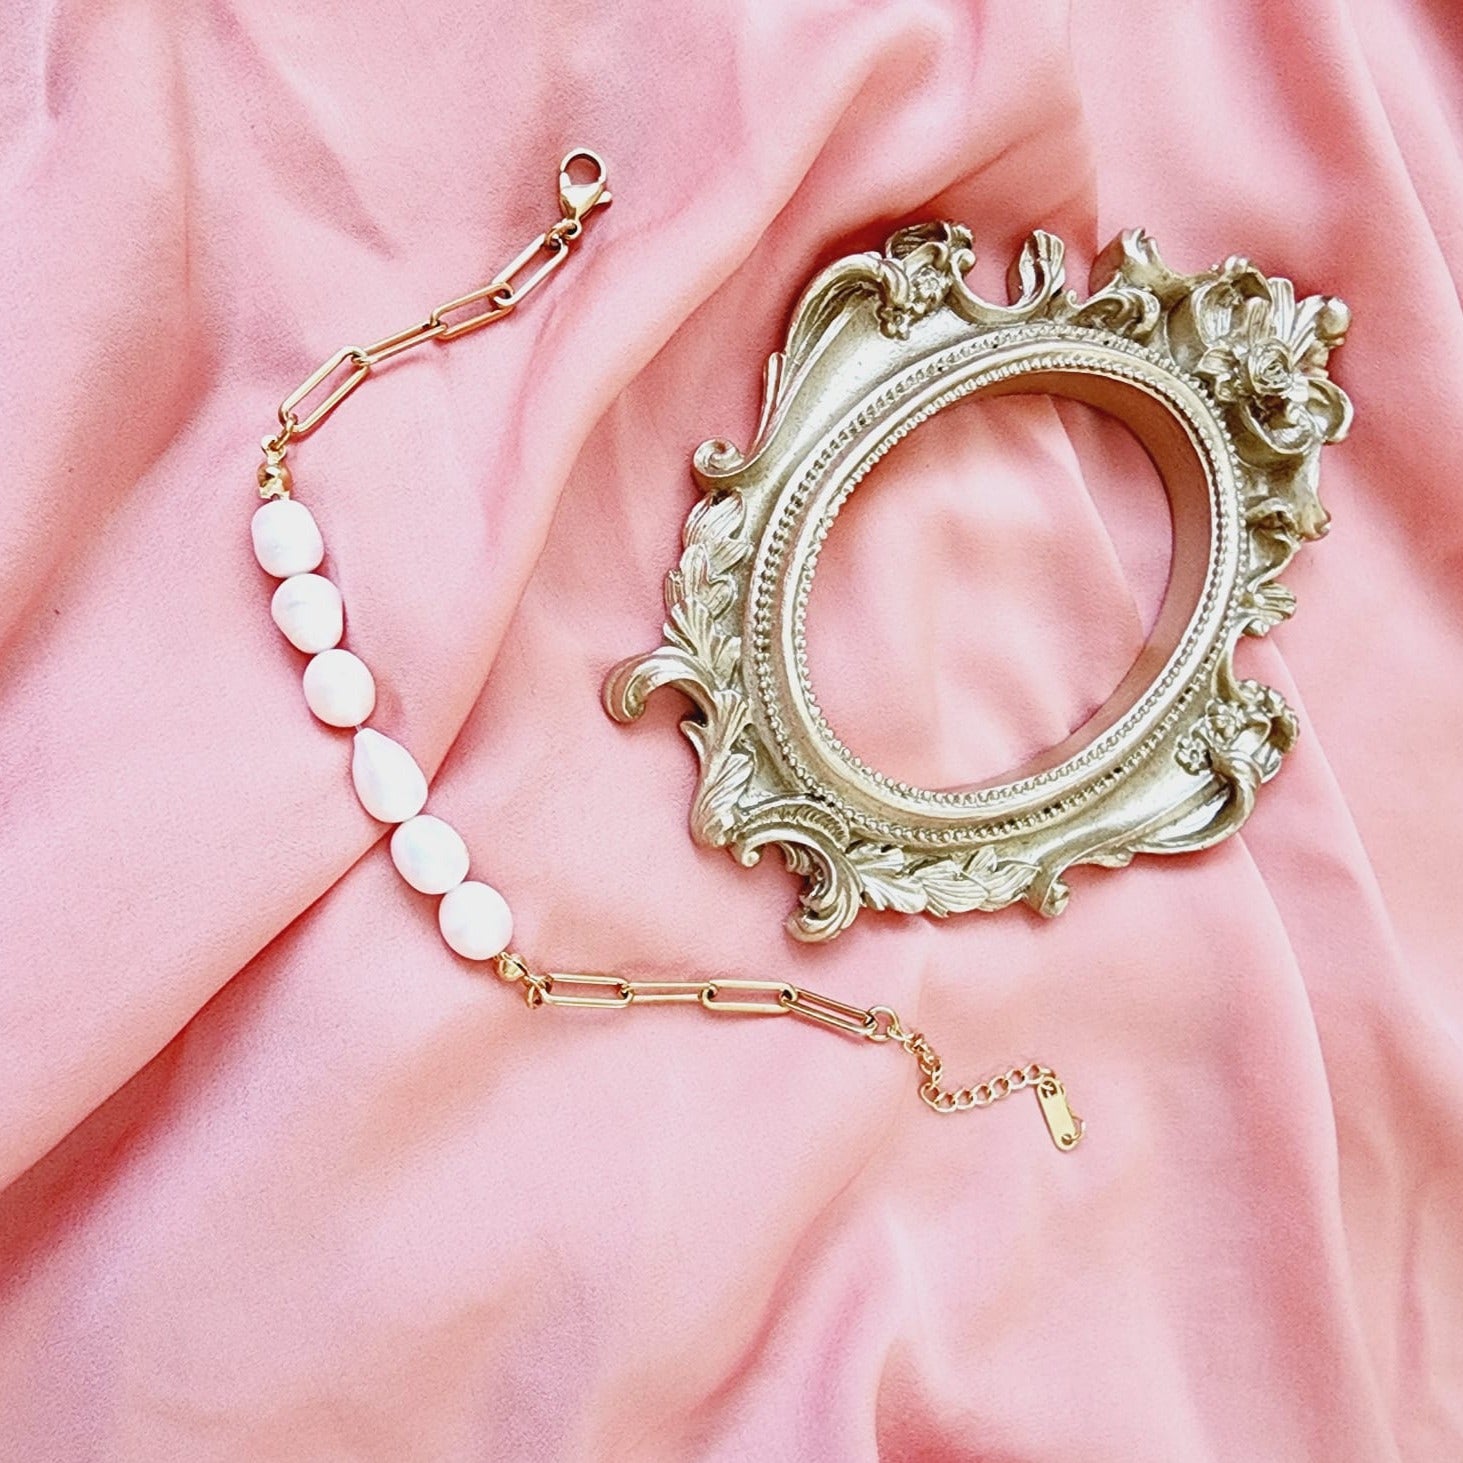 Pearl Bracelet, baroque pearl bracelet, herringbone bracelet, Water Resistant bracelet, Water Resistant Jewelry, Water Resistant jewelry, versatile bracelet, Pearl jewelry set, real pearl bracelet, pearl necklace meaning, freshwater pearl bracelet, pearl bracelet set, pearls bracelet amazon, fresh water pearls bracelet, real pearls bracelet, 18k gold plated bold jewelry set, baroque pearls bracelet, pearls gold link bracelet, pearls baroque bracelet, Summer Jewelry, tropical glamour